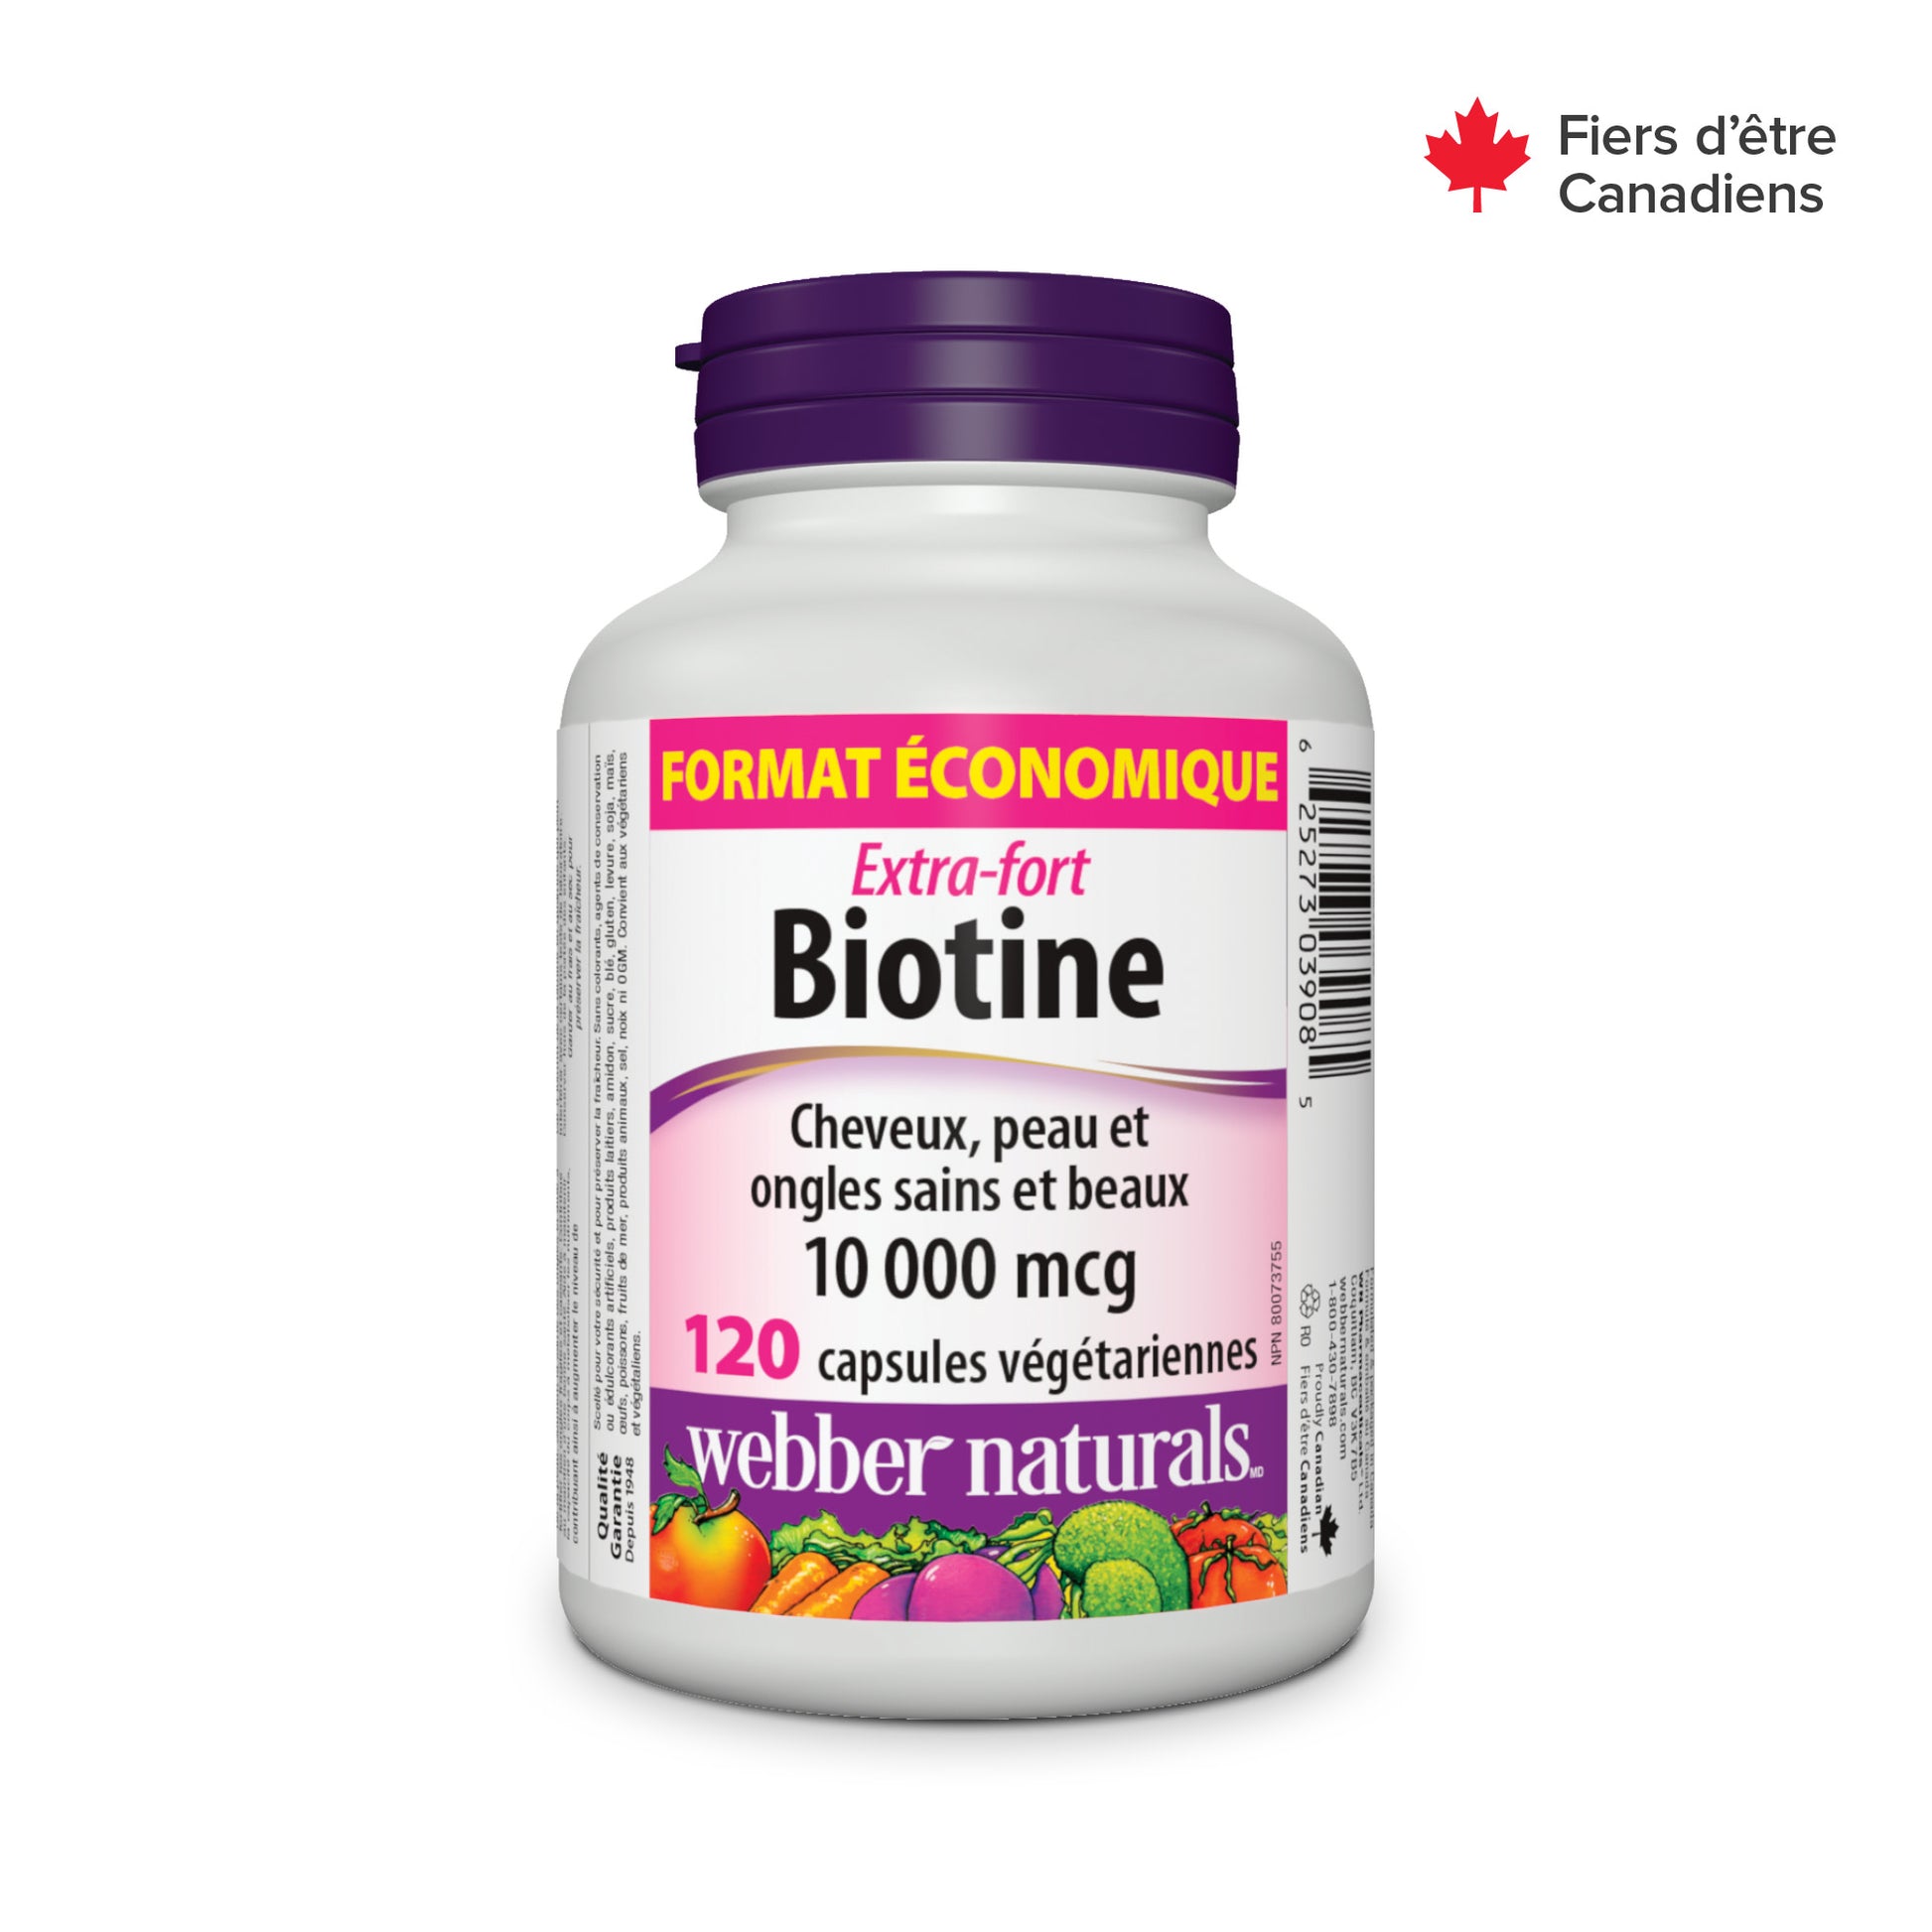 Biotine Extra-forte 10 000 mcg for Webber Naturals|v|hi-res|WN3908